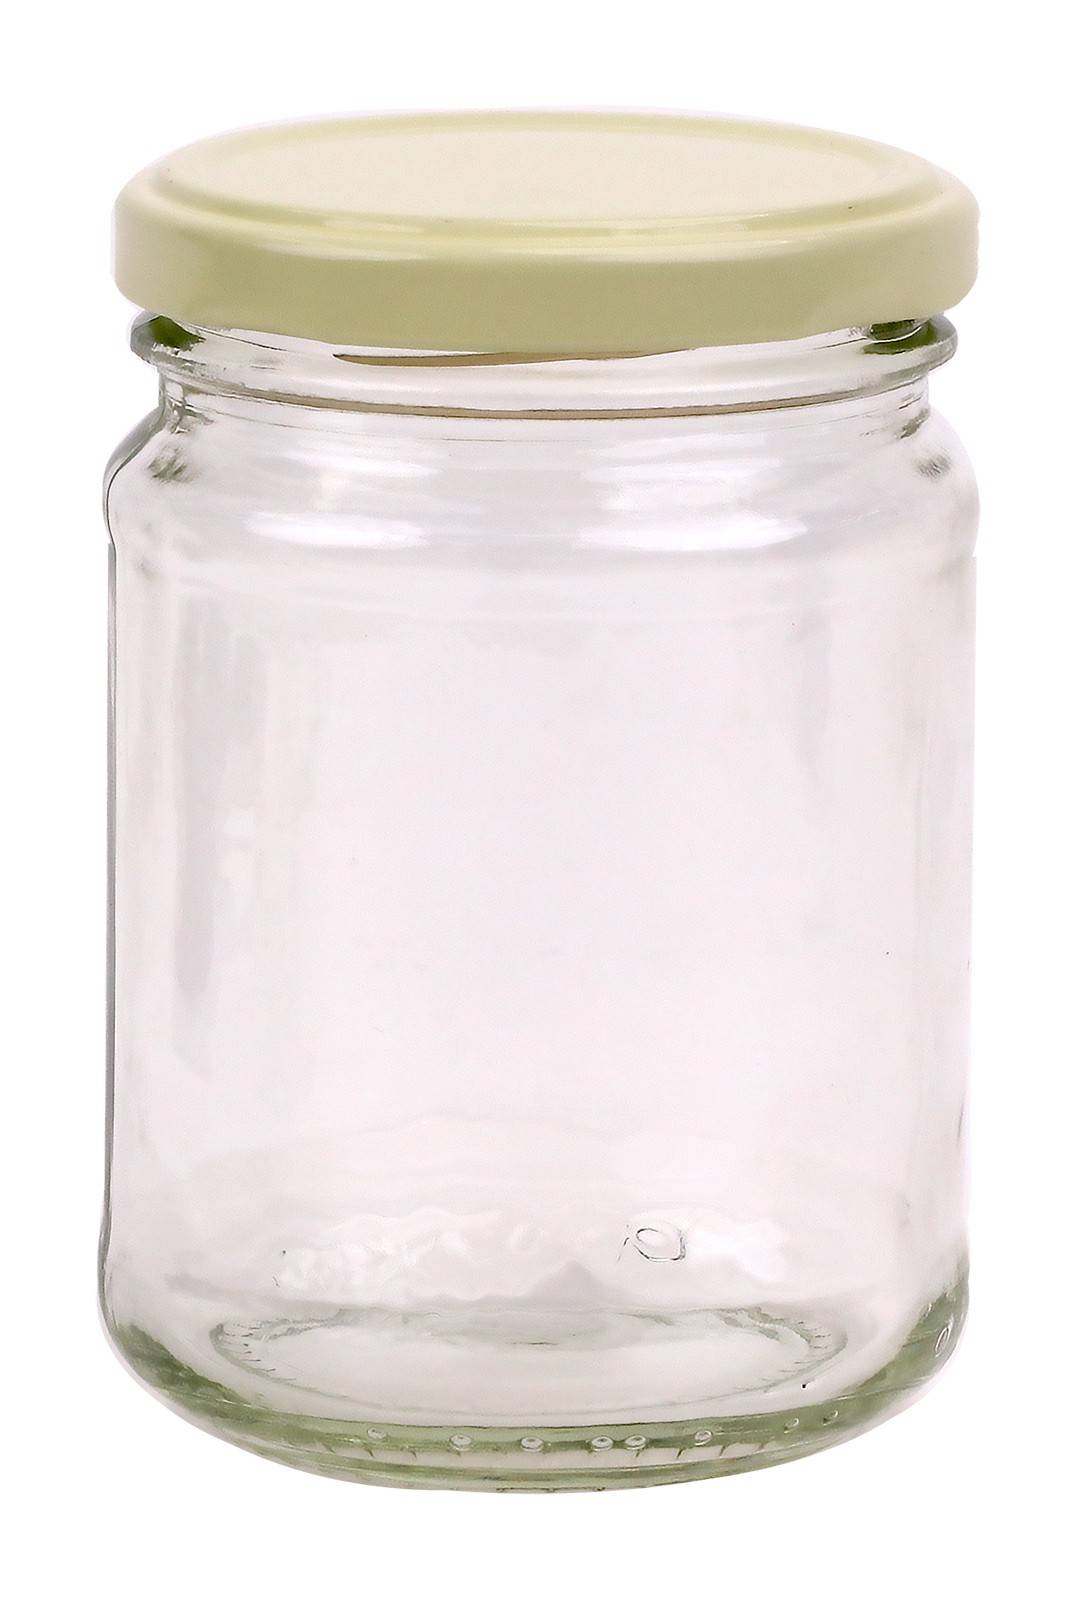 Bulk Buy Australian Made 250ml Round Glass Jars With Metal Lid